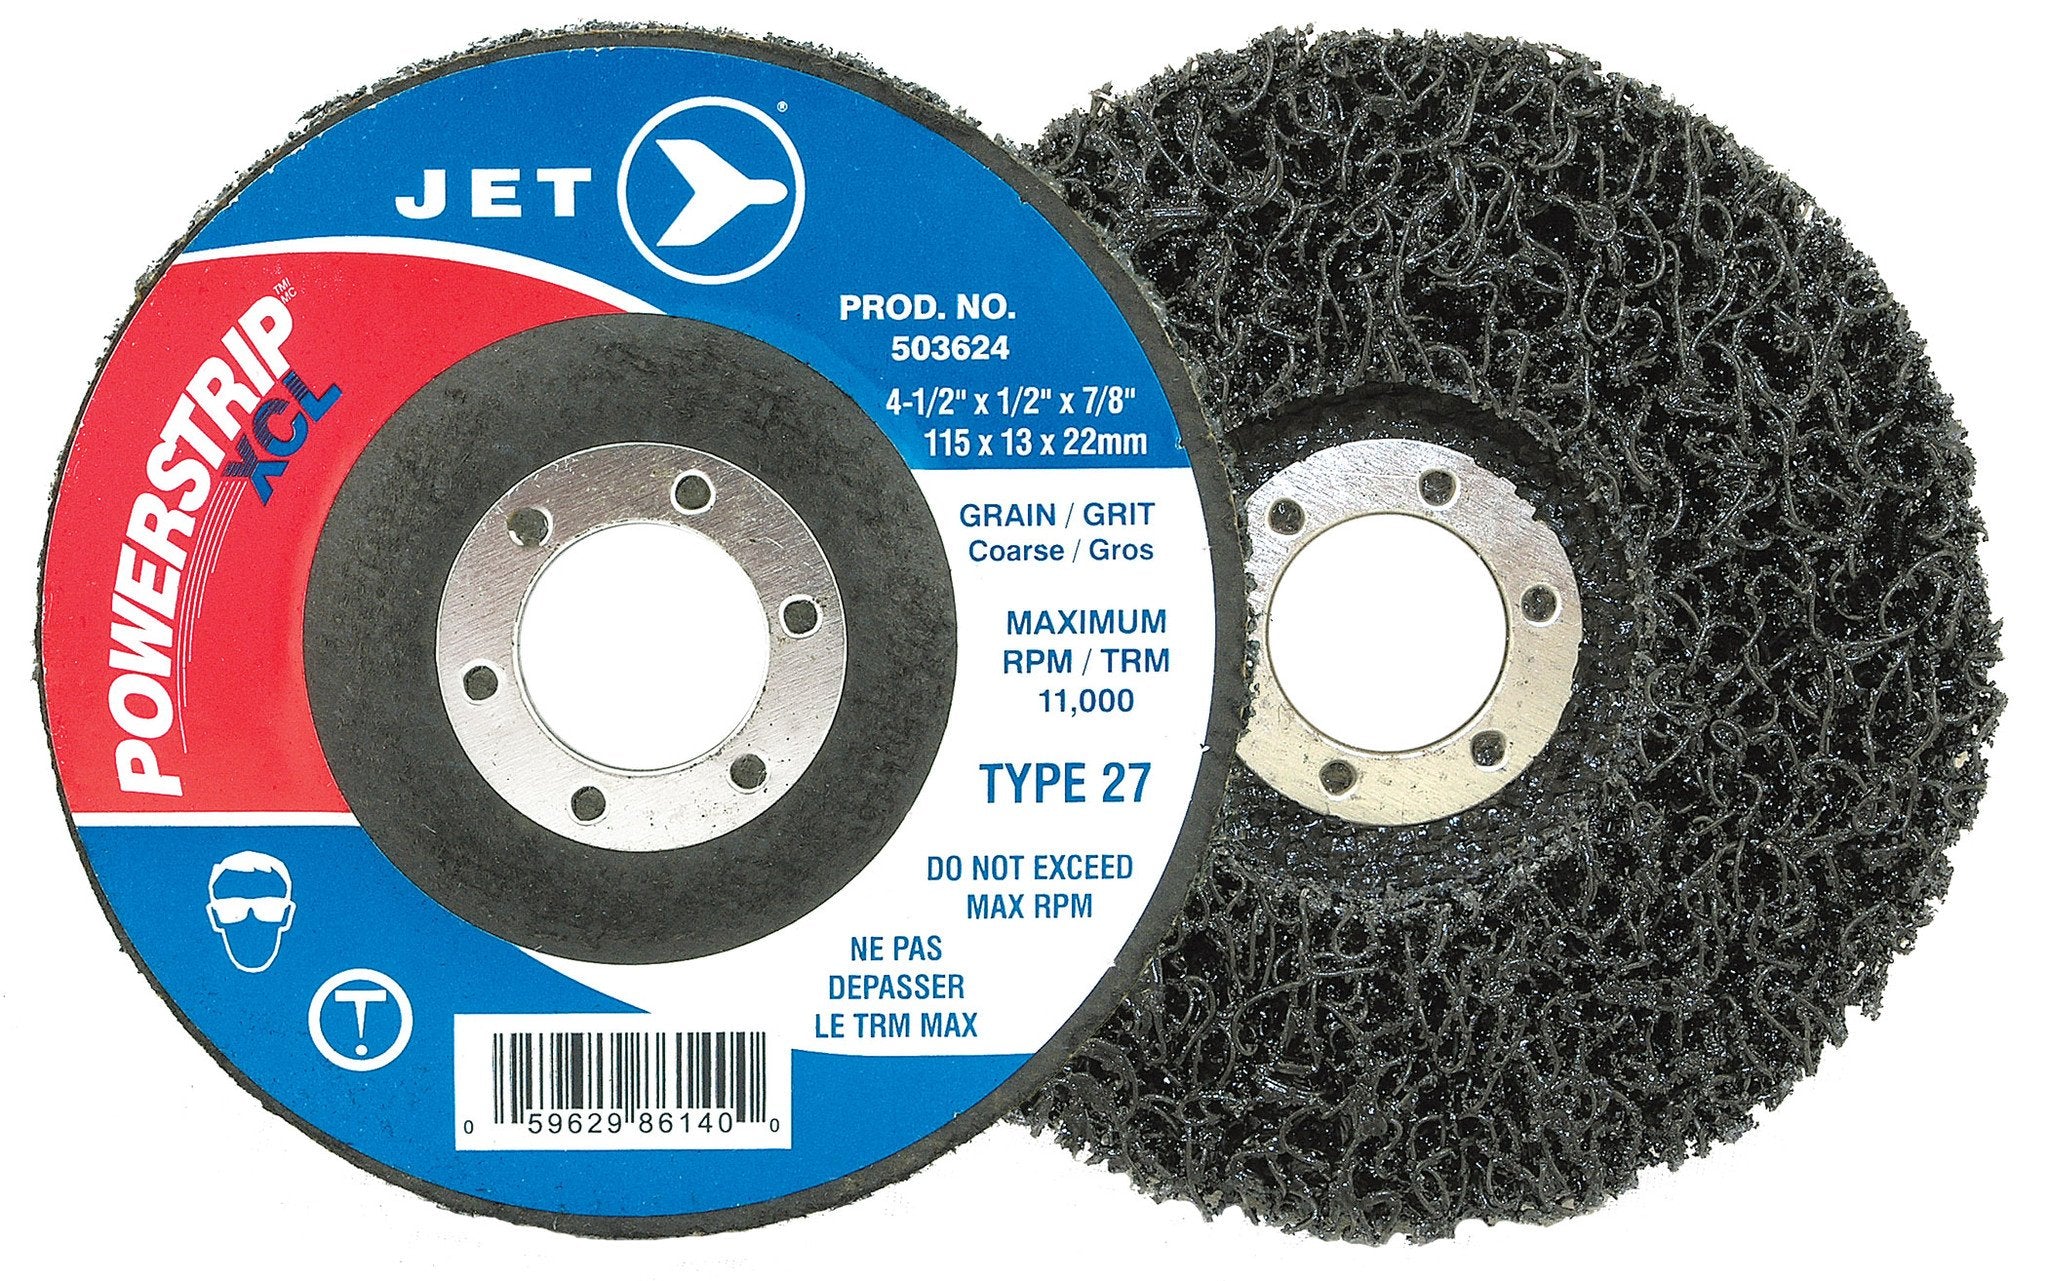 Jet Powerstrip T27 High Performance Stripping Discs Shop Equipment - Cleanflow